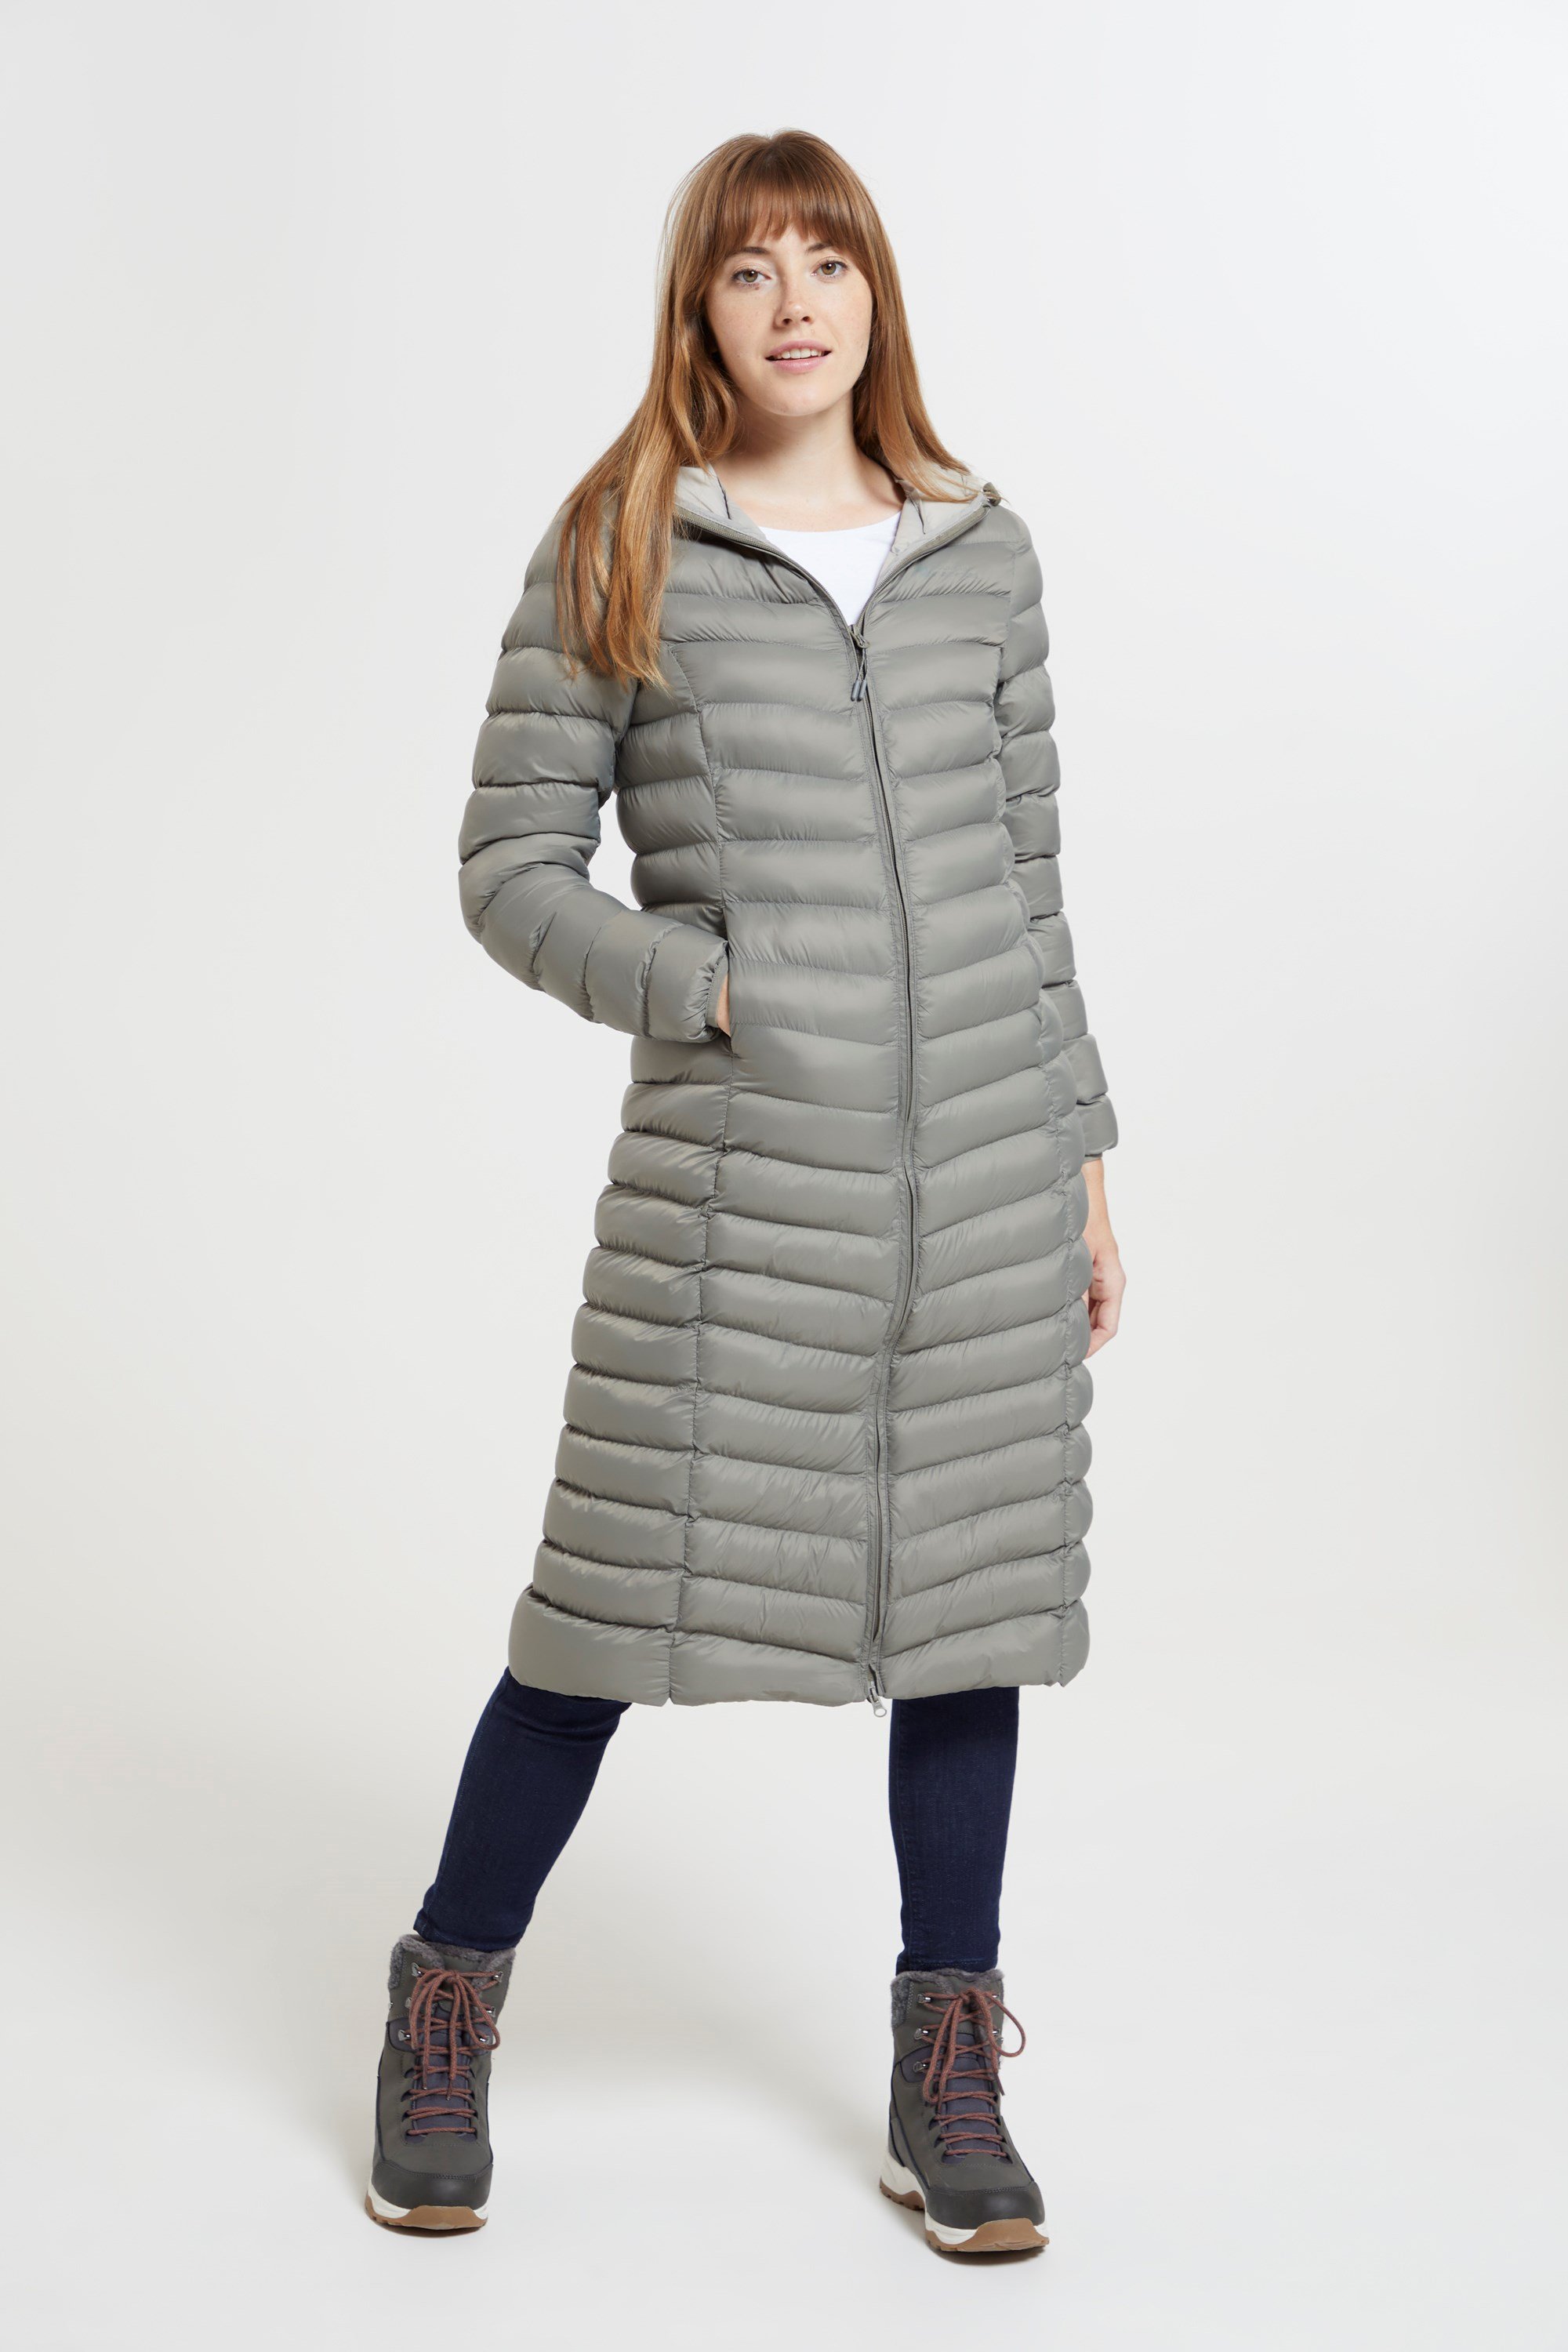 Mountain Warehouse winter warm womens long jacket coat 